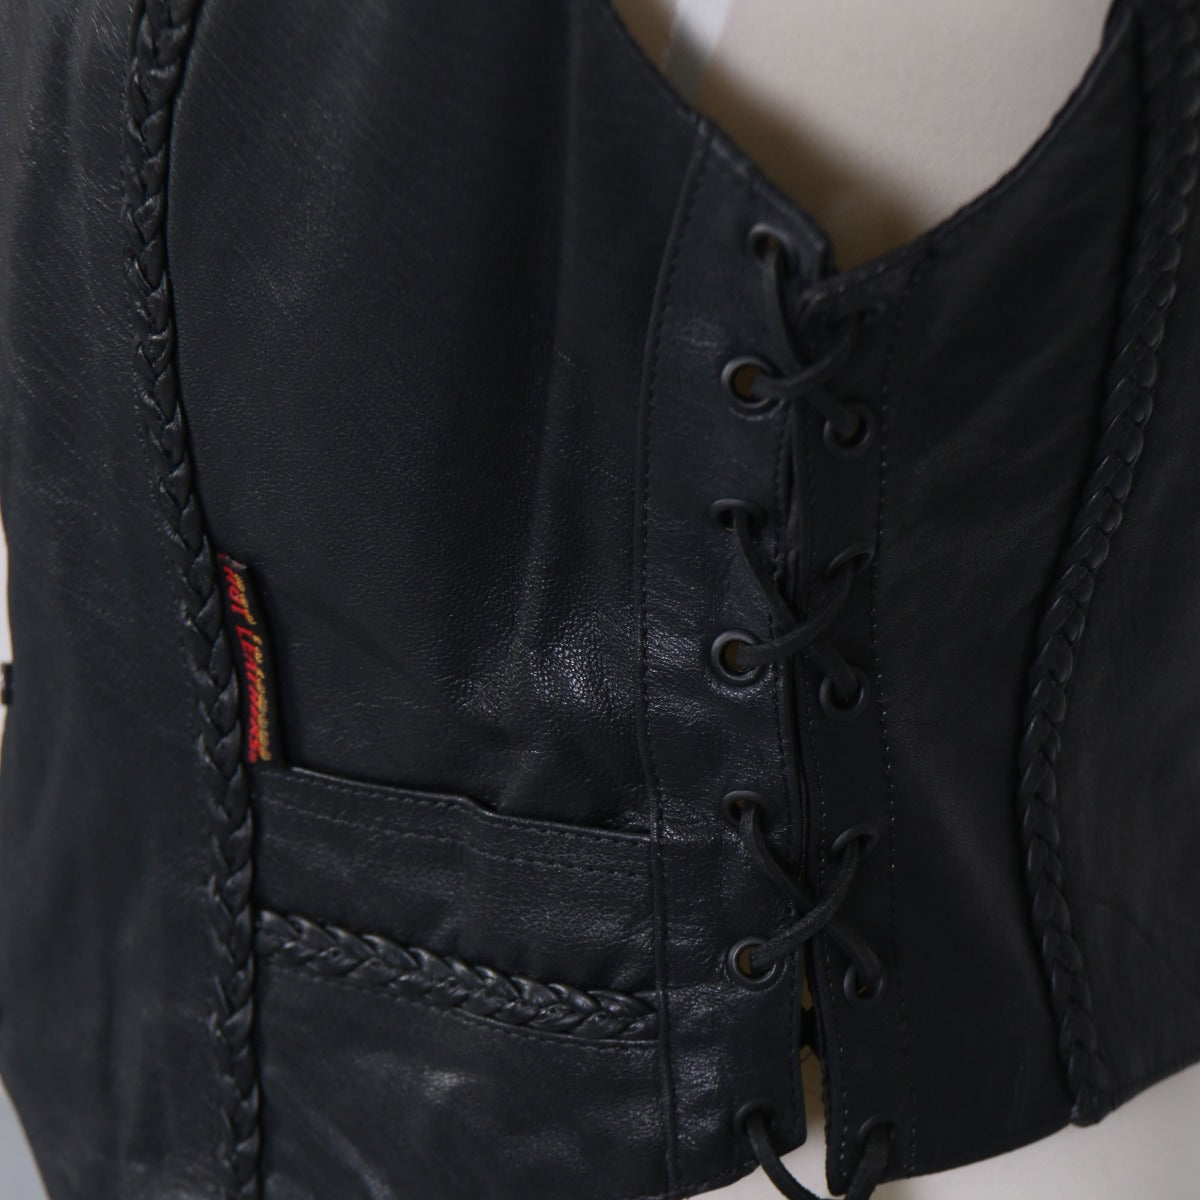 Hot Leathers Women's Black Leather Vest